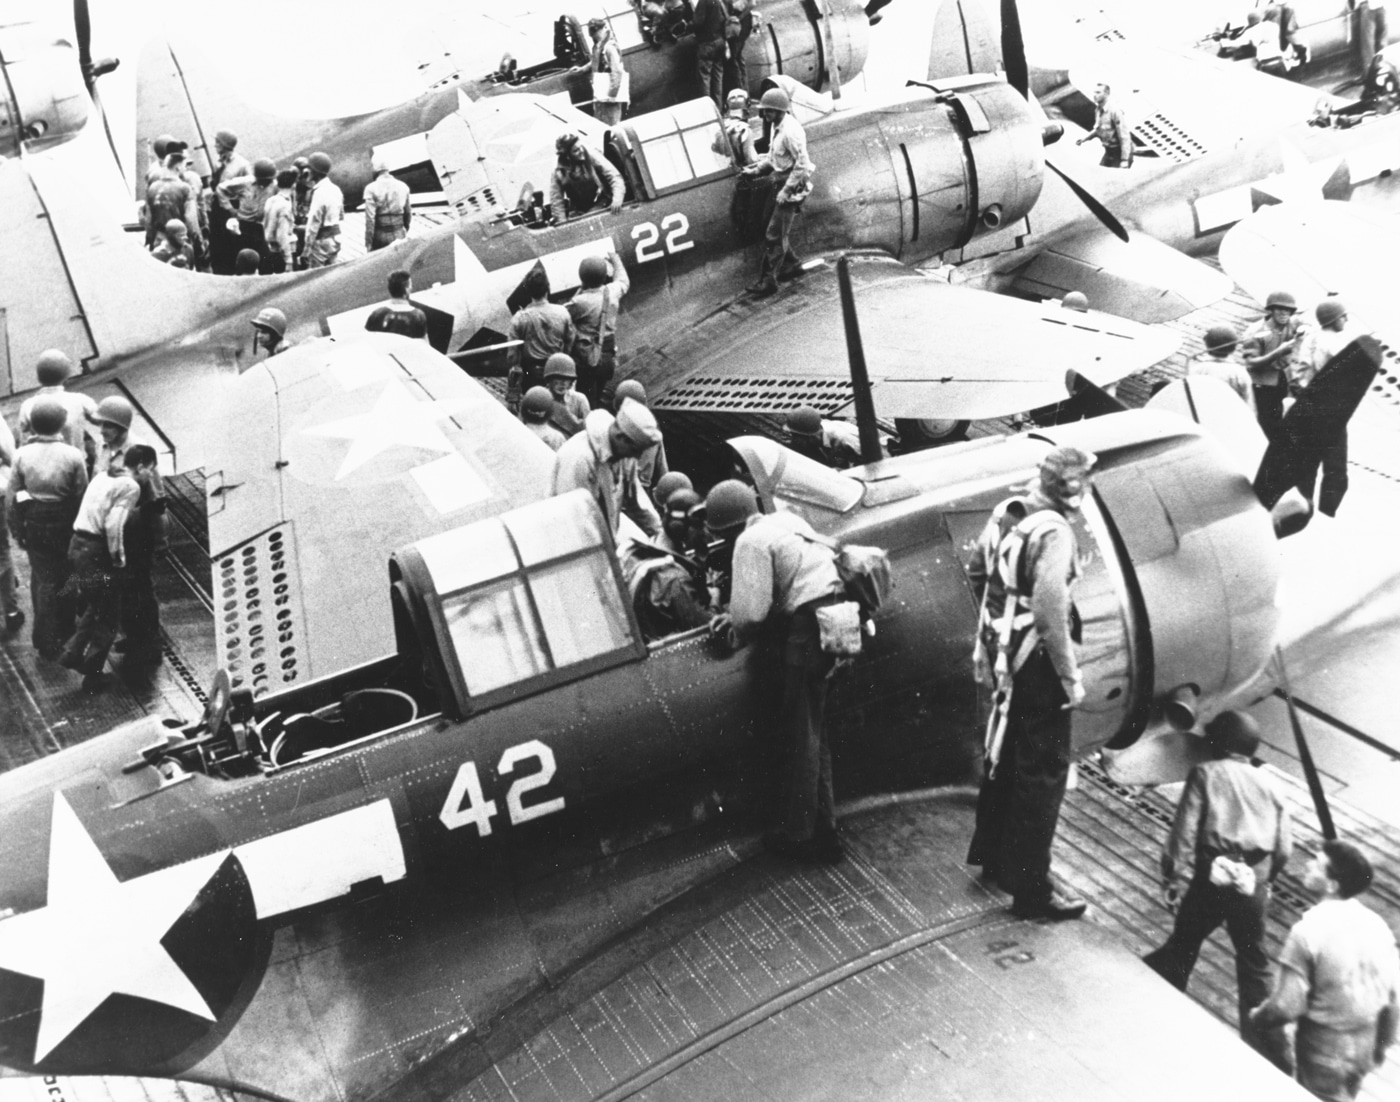 sbd-5 bombers on uss lexington after hitting gilbert islands